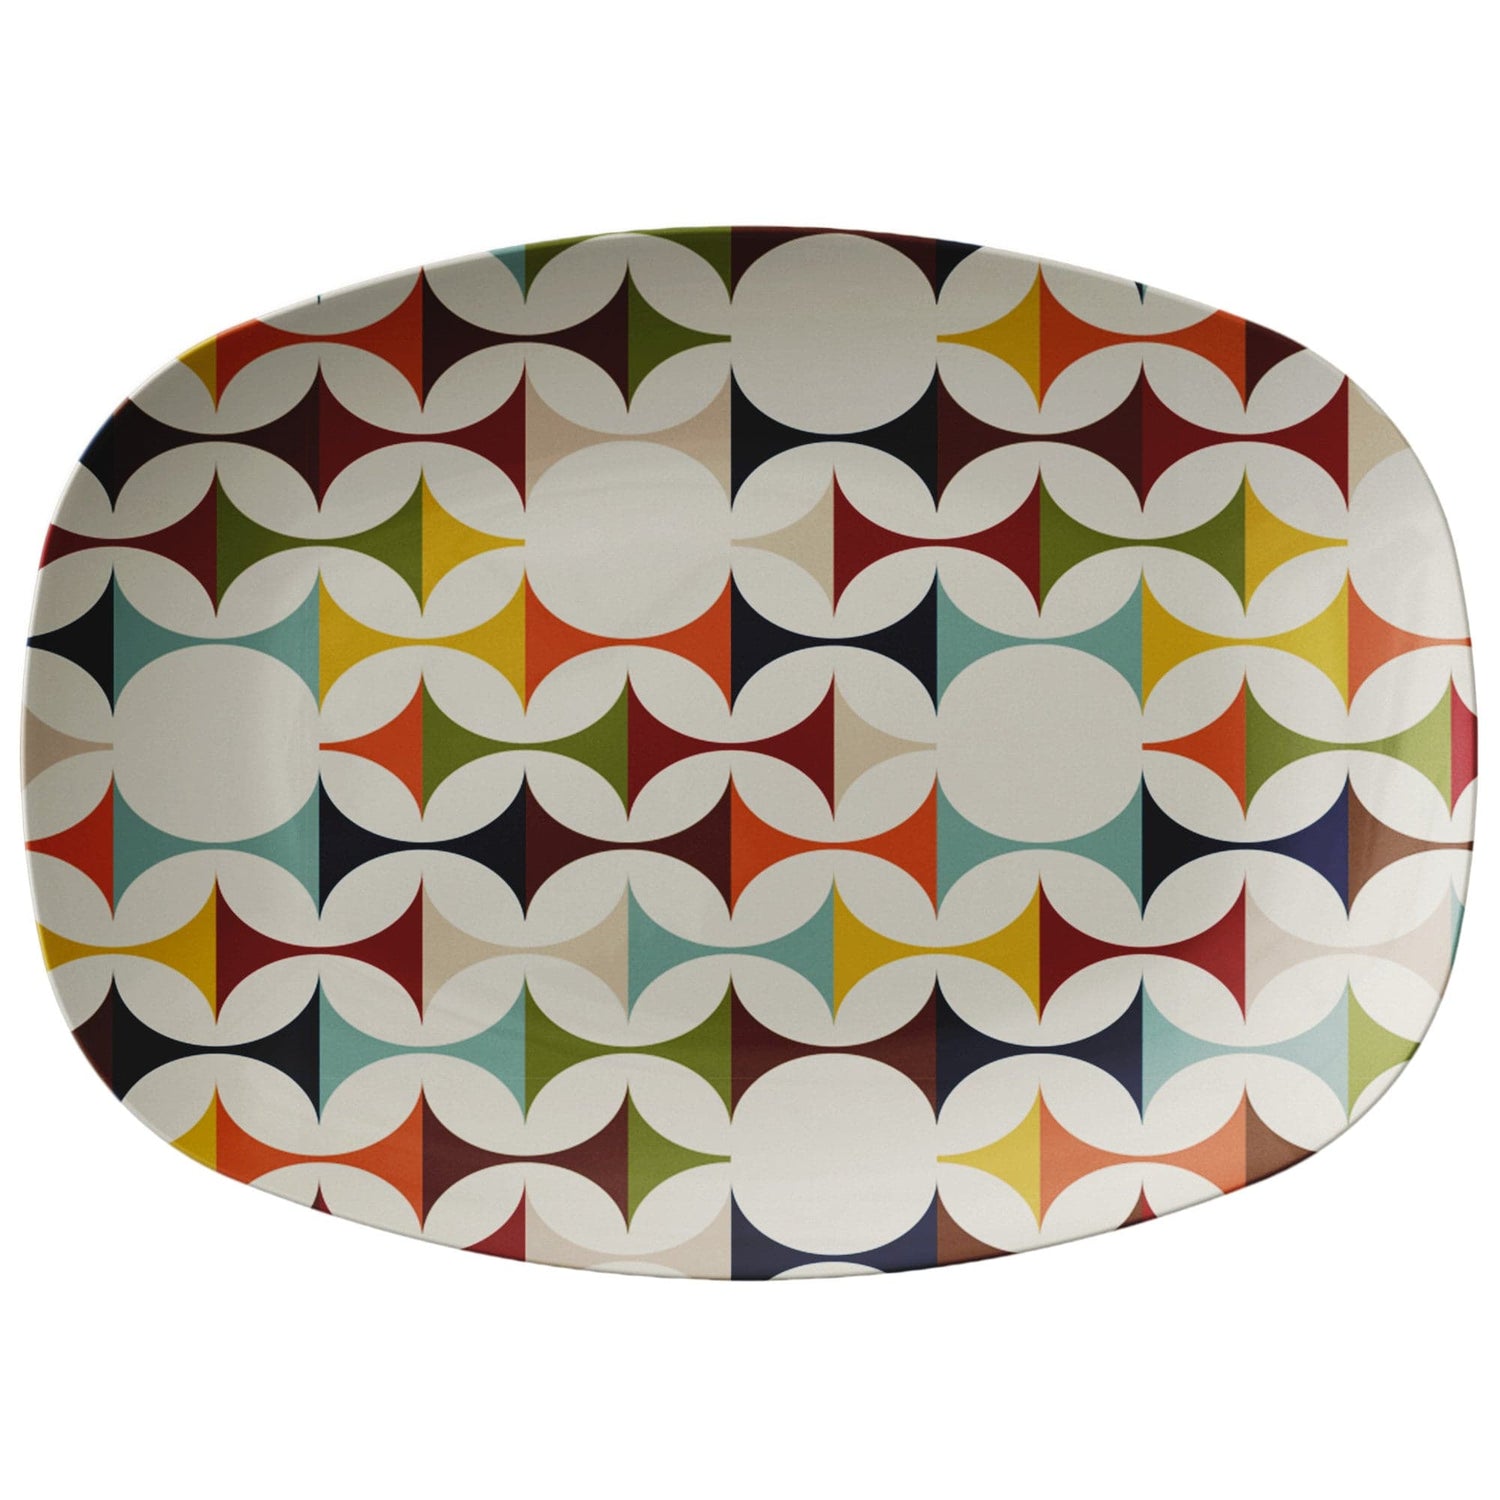 Kate McEnroe New York Retro Mid Century Modern Geometric Serving Platter in Cream, Teal, Mustard, and RustServing Platters9727